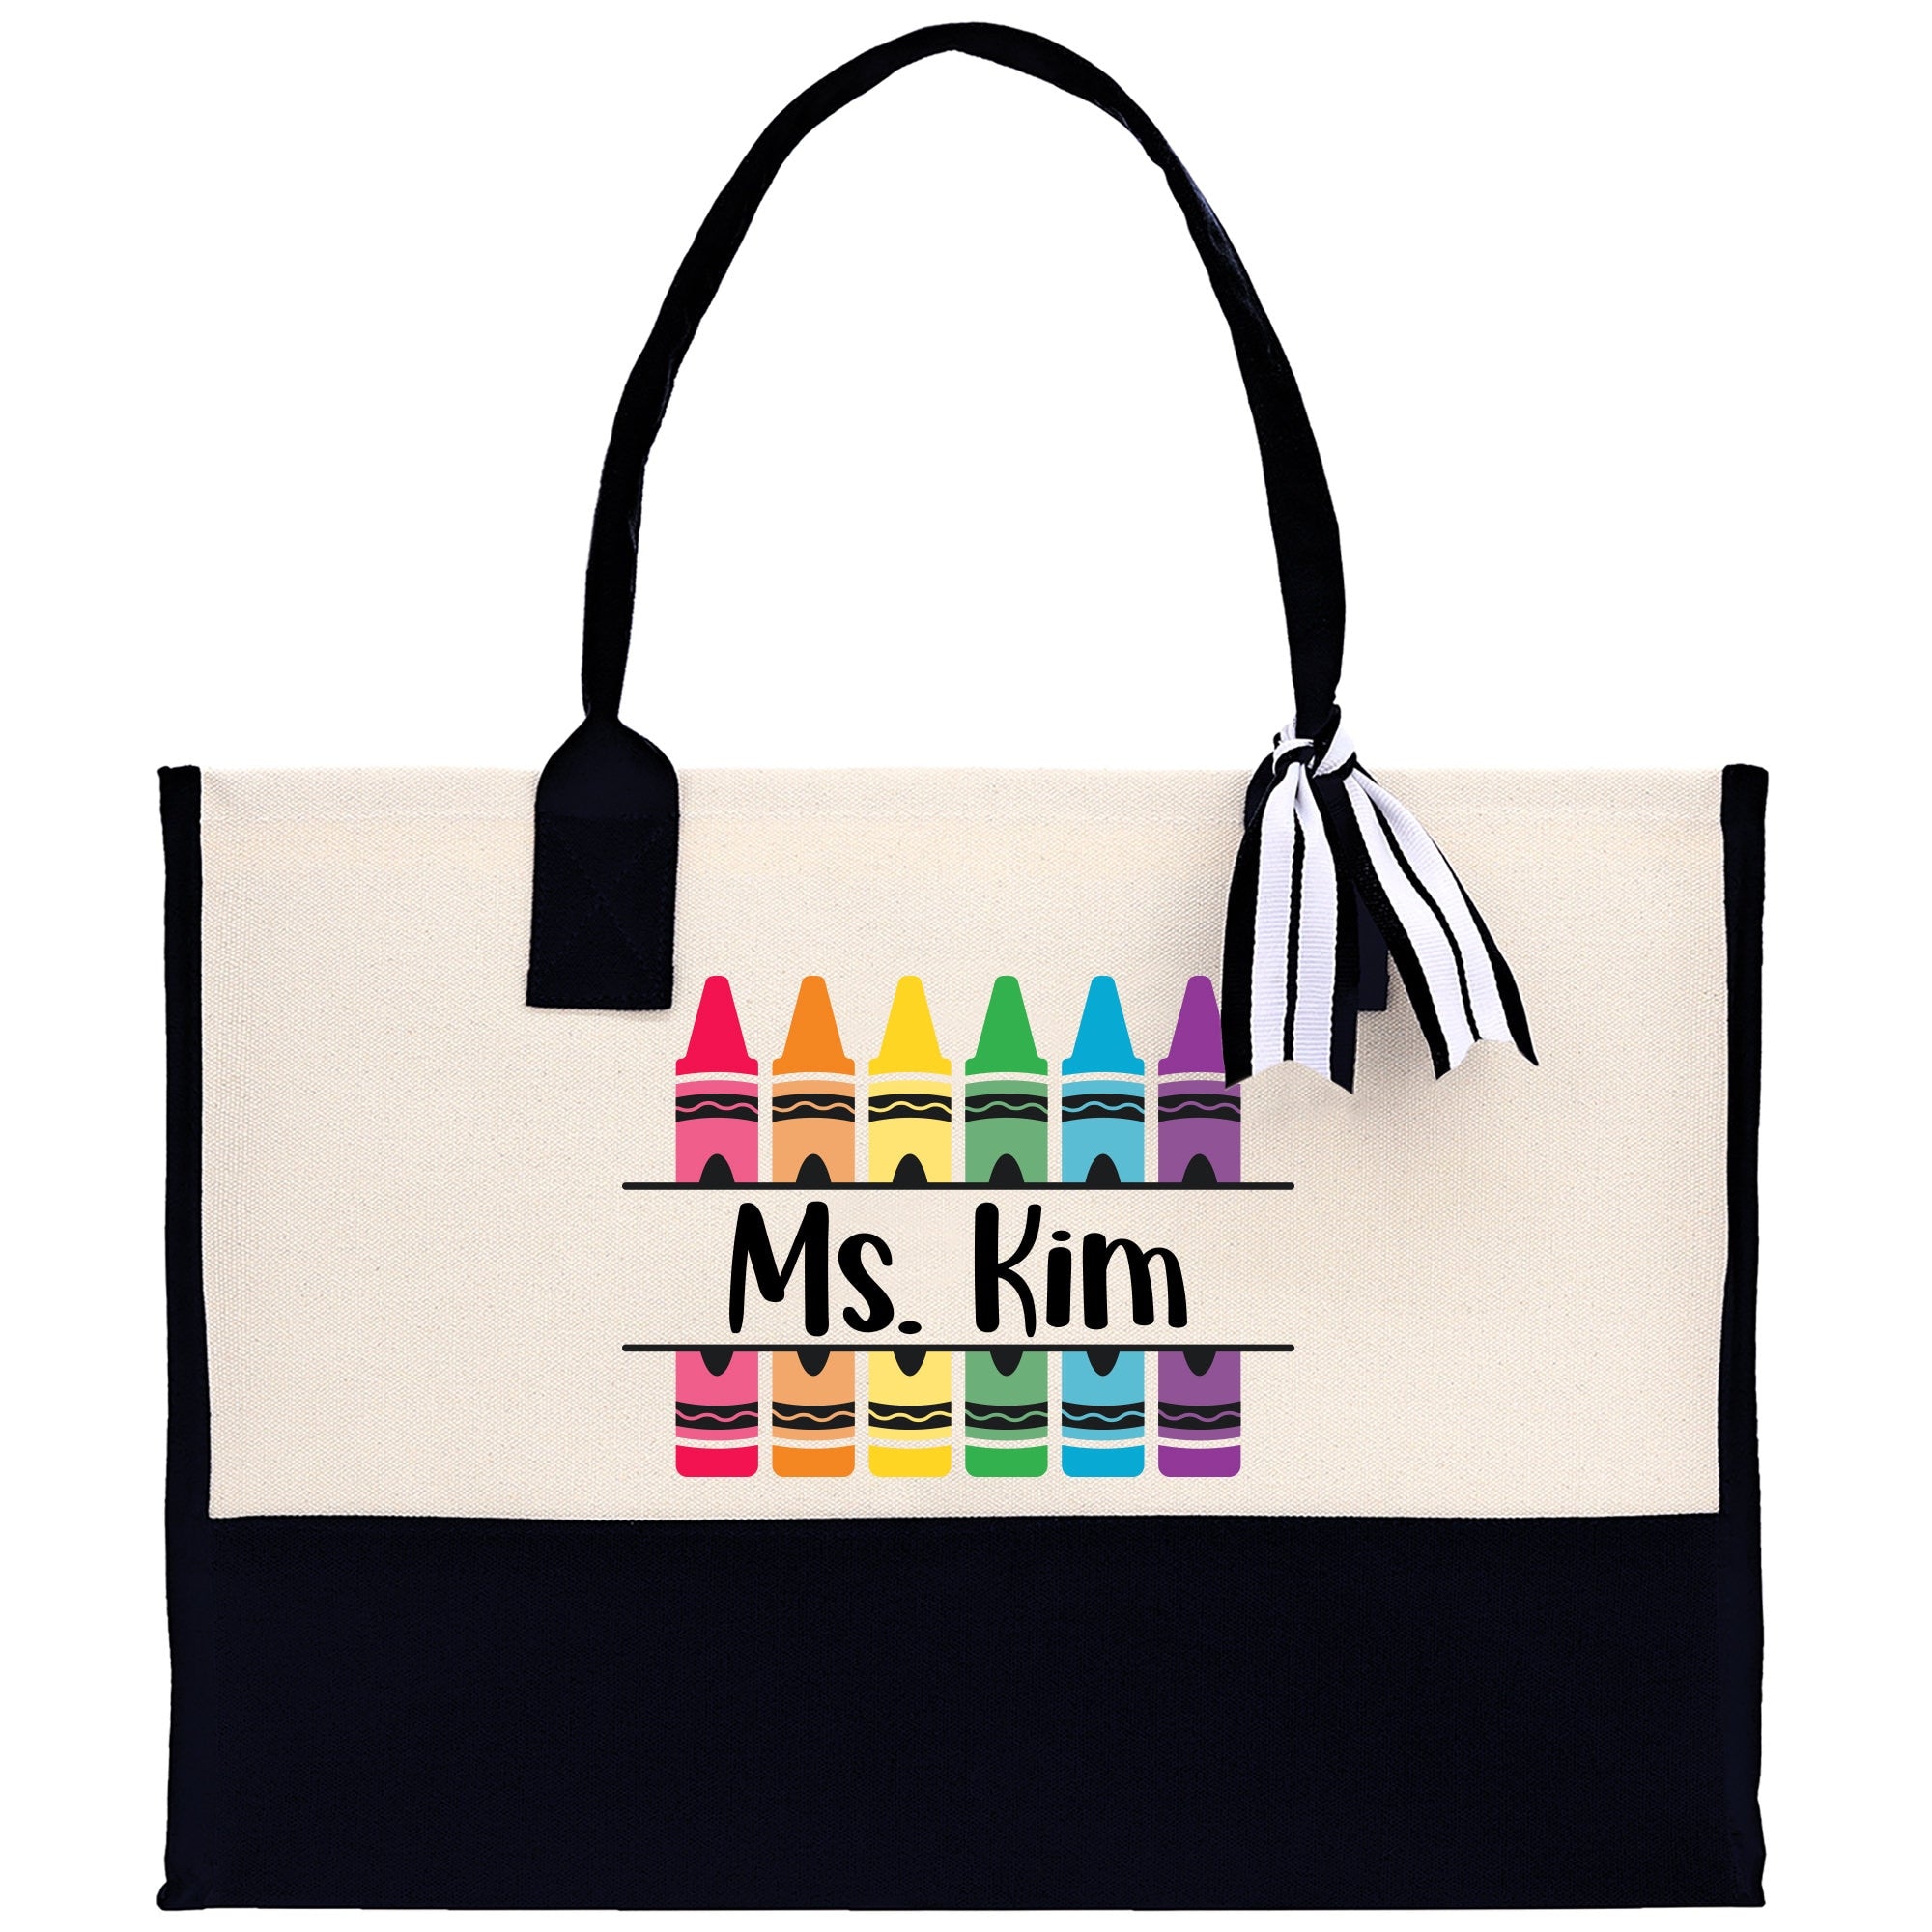 Personalized Teacher Cotton Canvas Tote Bag Gift for Teachers Teacher Life Tote Custom Teacher Appreciation Gift Bag Teacher Name Bag